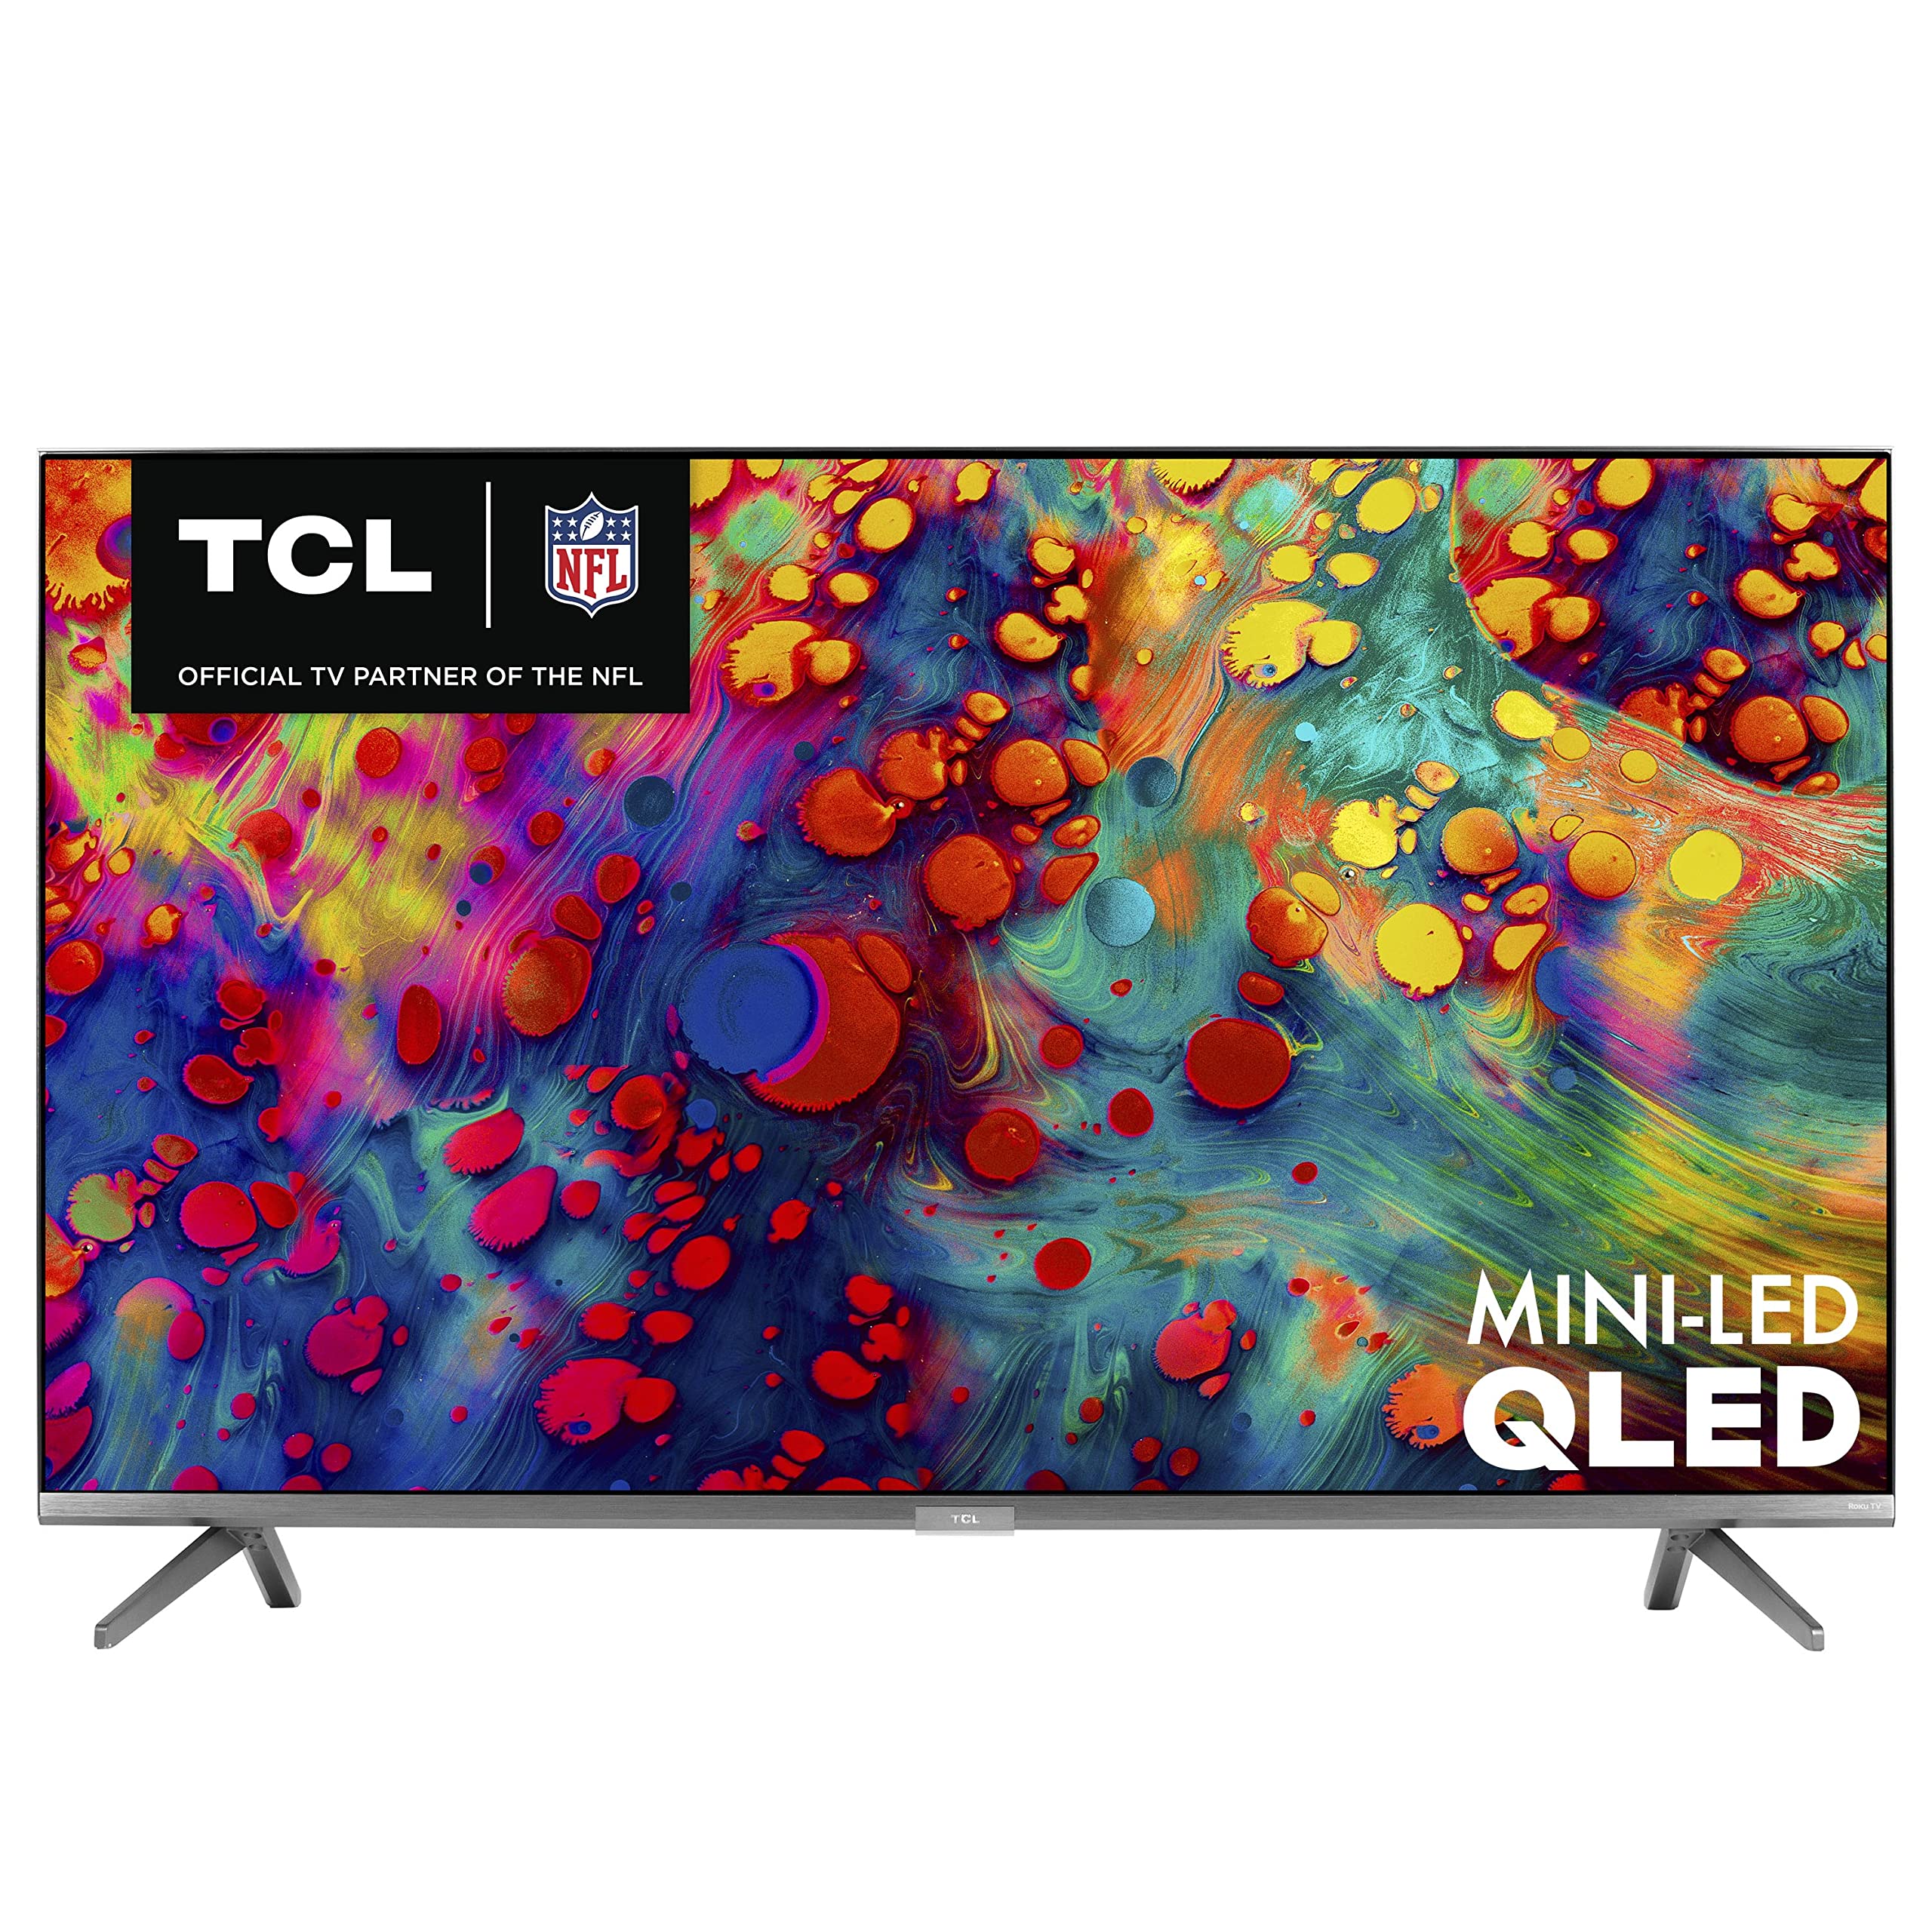 TCL 55-inch 6-Series 4K UHD Dolby Vision HDR QLED Roku Smart TV - 55R635, 2021 Model , Black